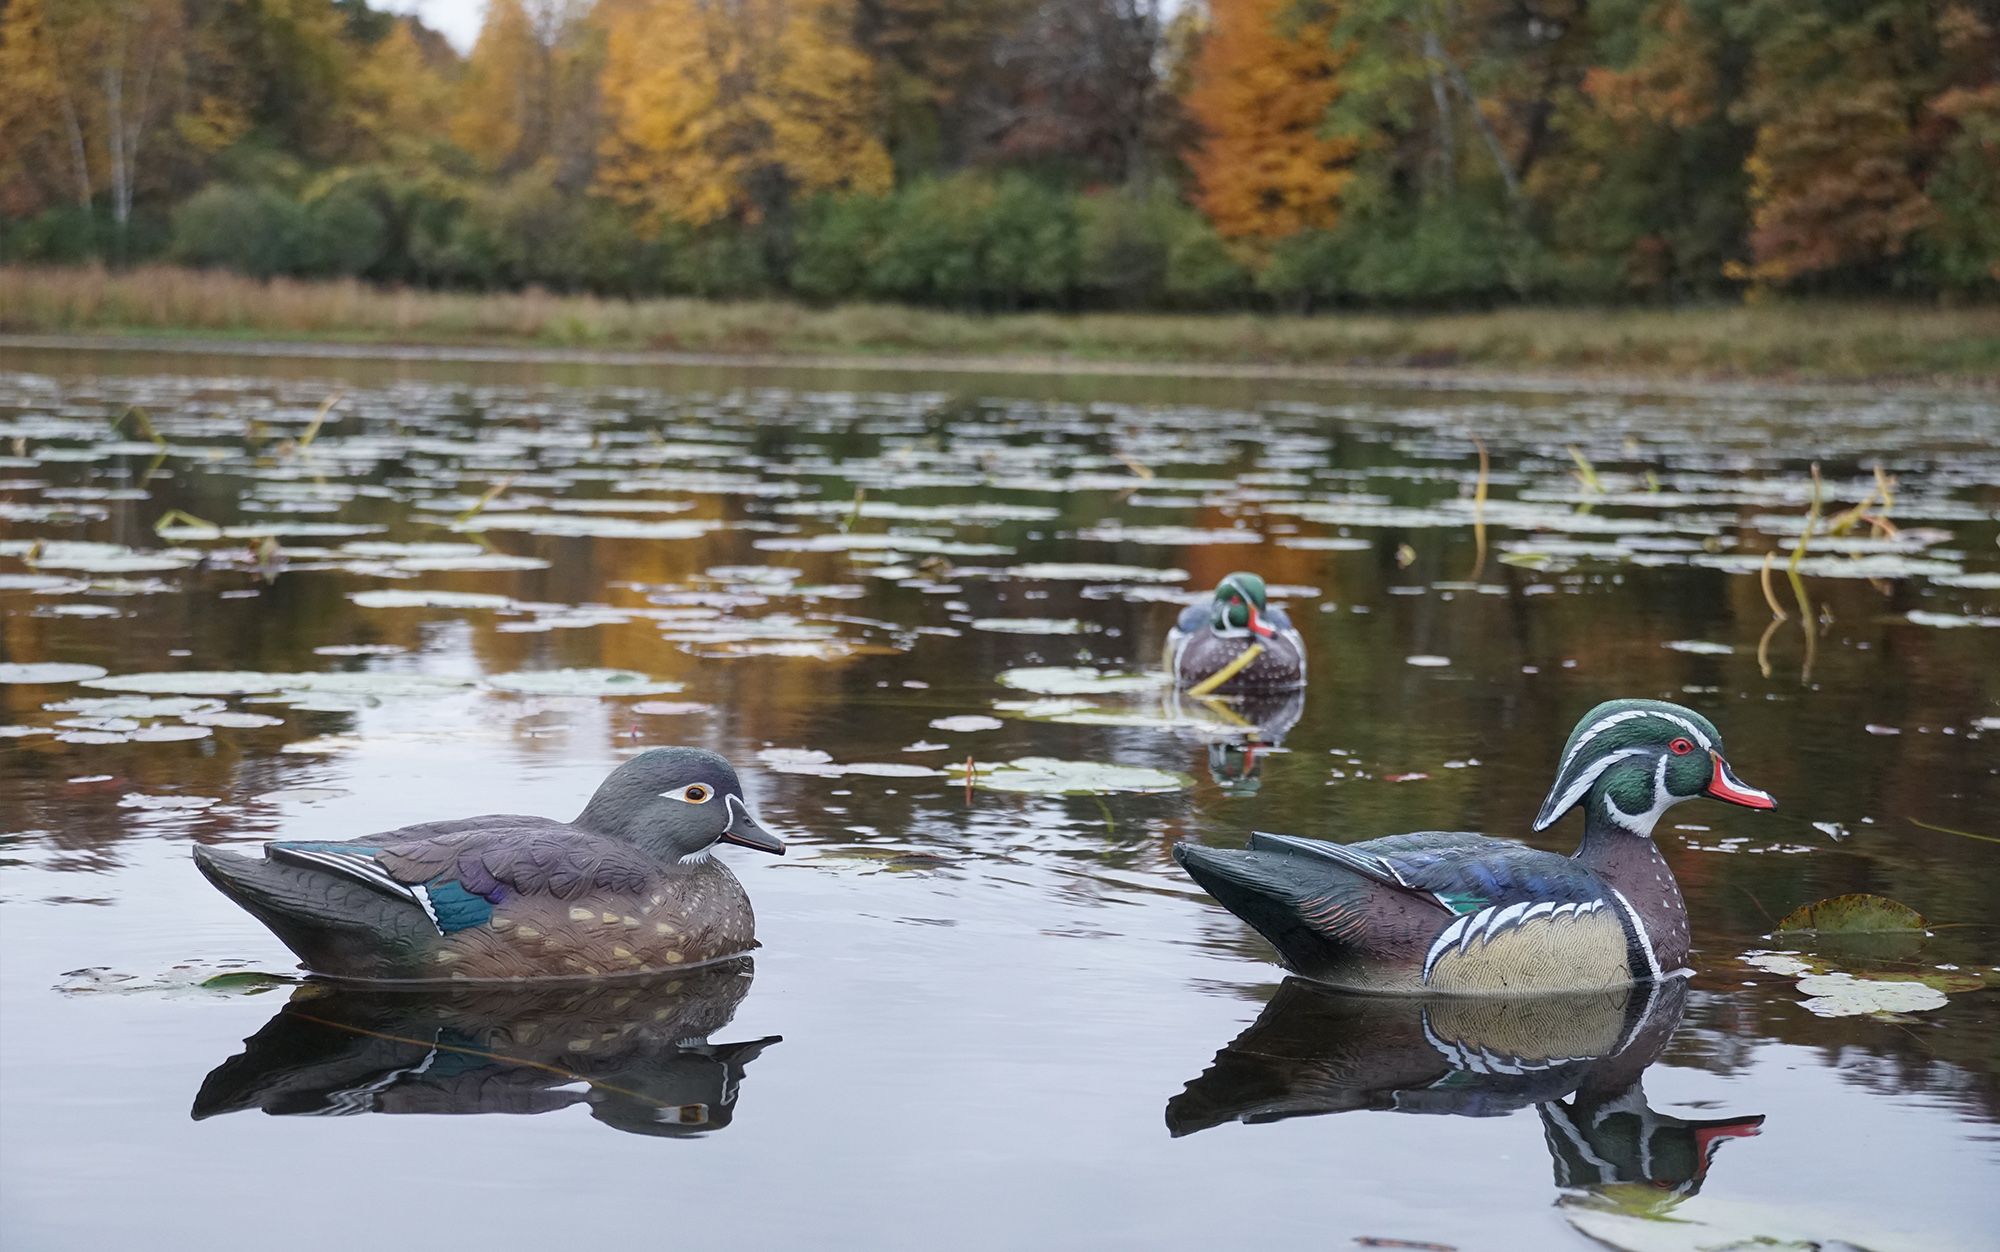 Avian-X wood ducks on the water.